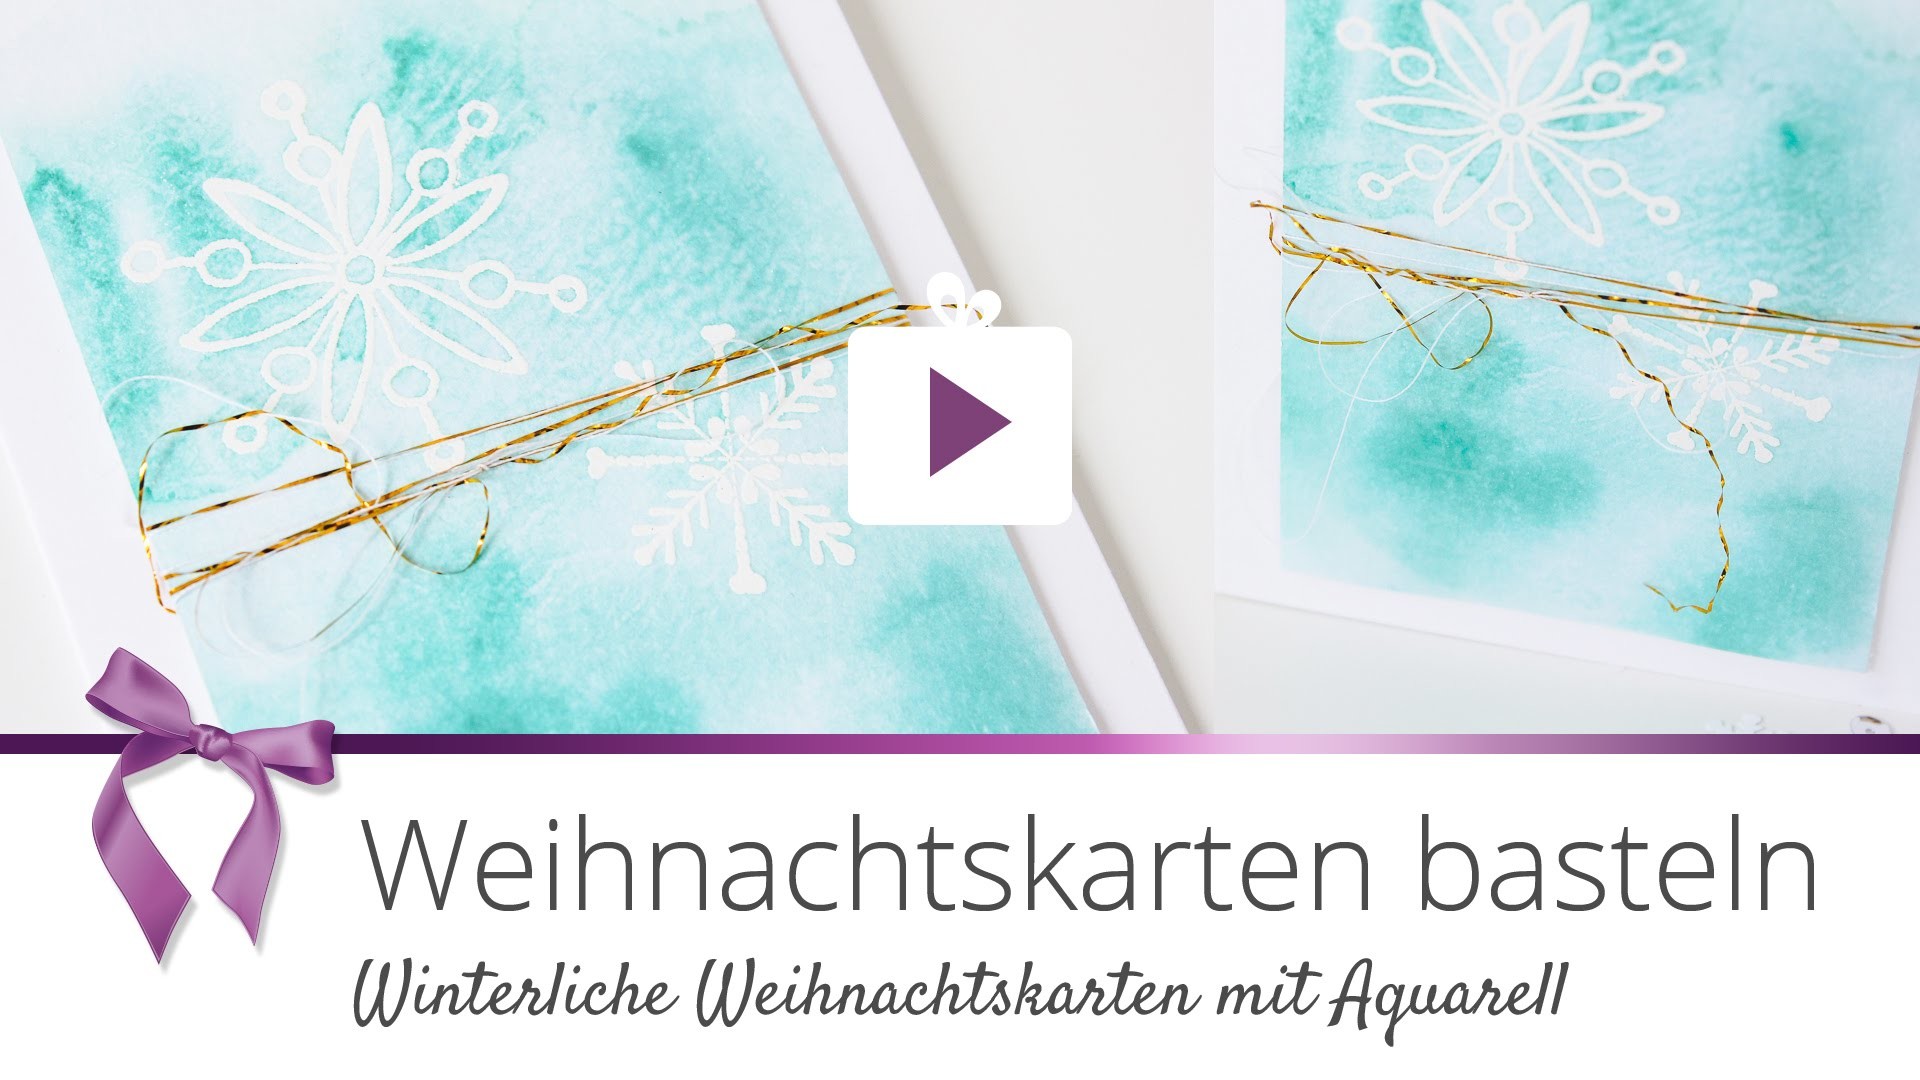 [DIY] Aquarell Weihnachtskarte basteln | Danato